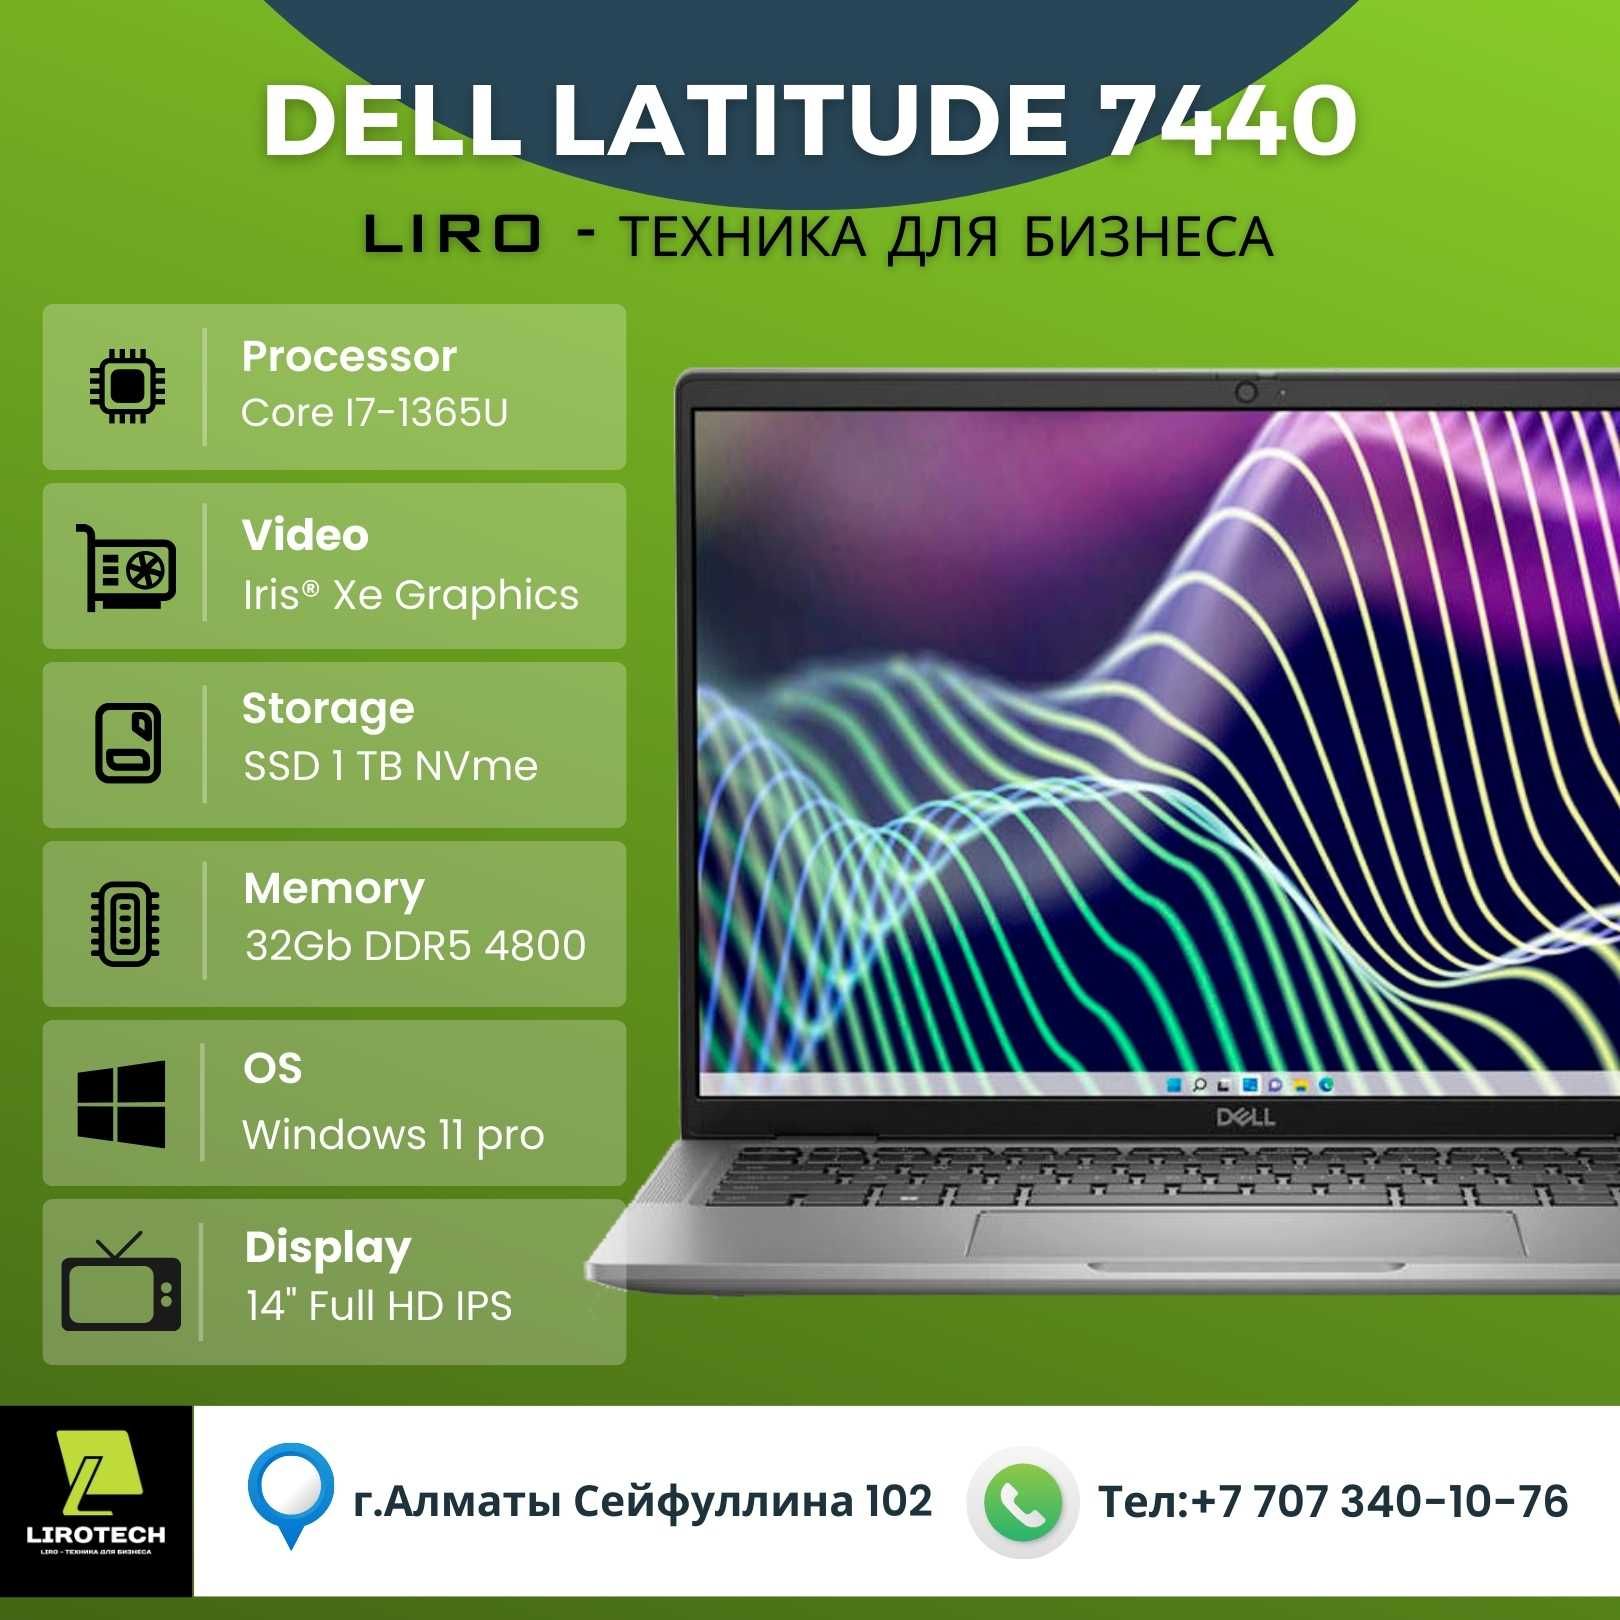 Ноутбук Dell Latitude 7440 (Core I7-1365U - 3900GHz 10/12) г. Алматы.